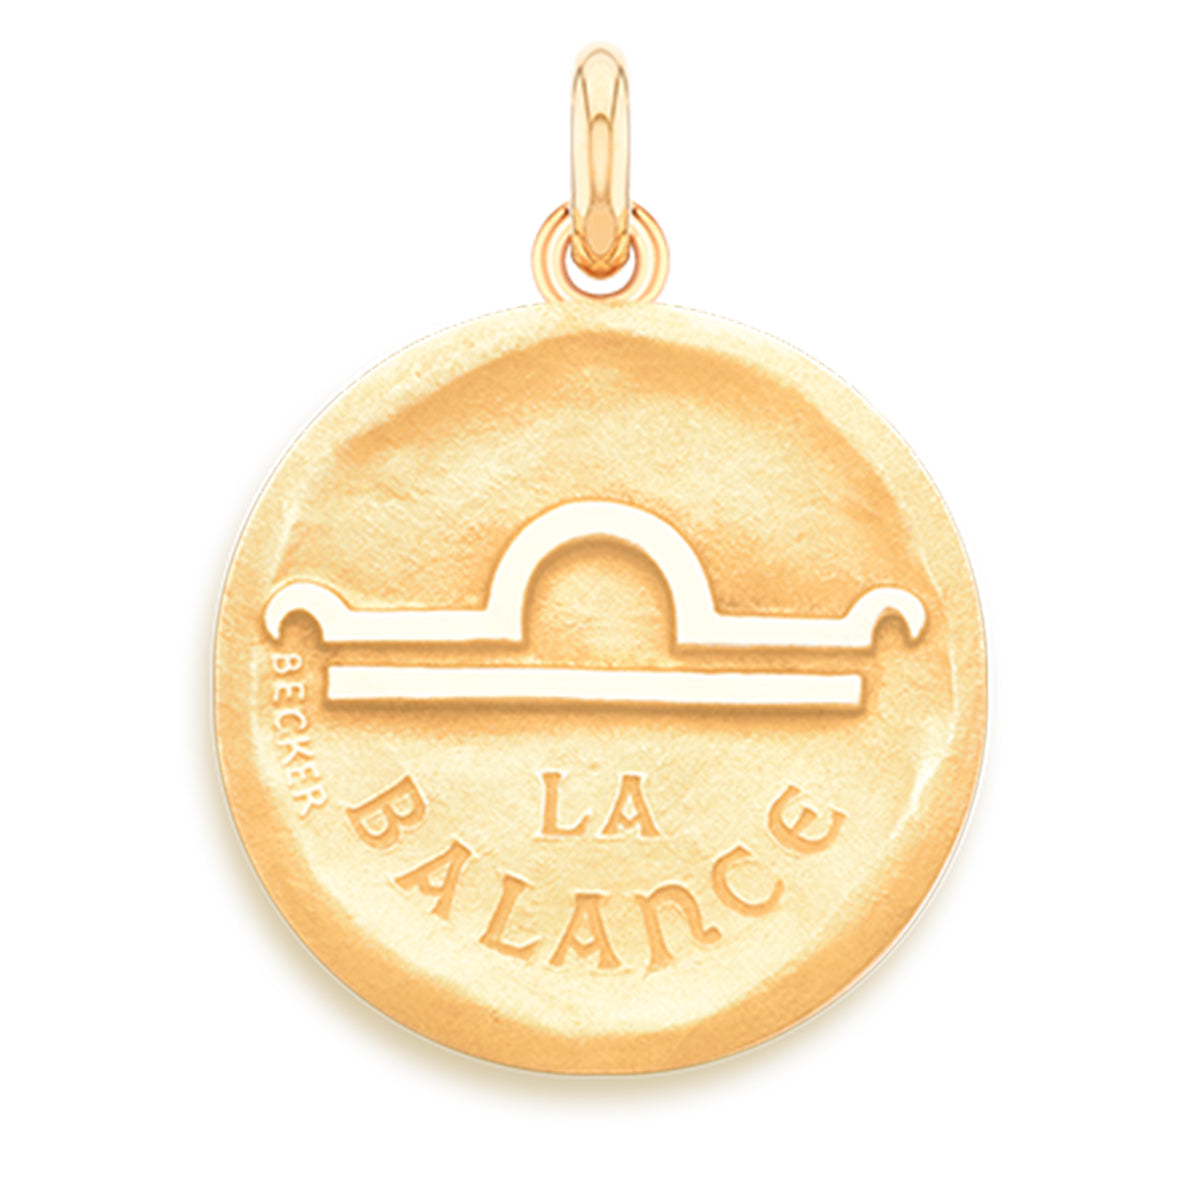 Libra /La Balance 18k Symbol Medallion Charm